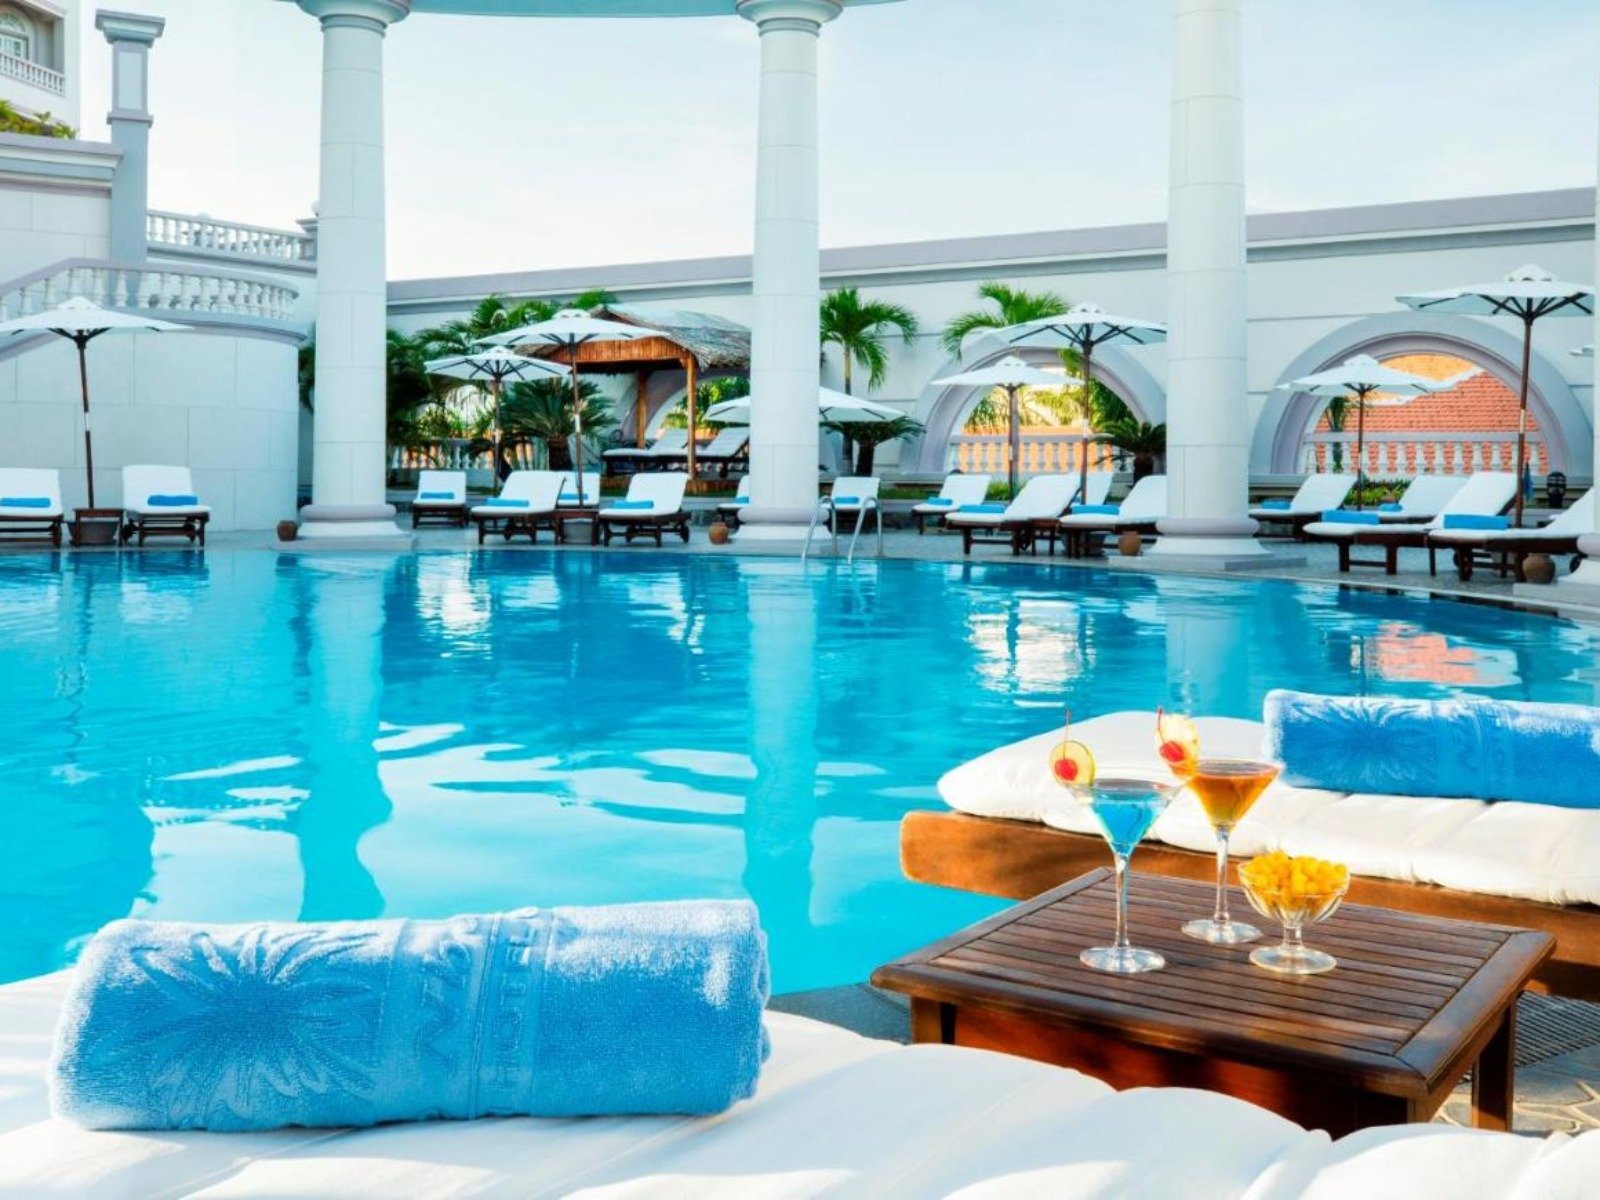 Sunrise Nha Trang Beach Hotel Spa 6 - Things To Do In Nha Trang